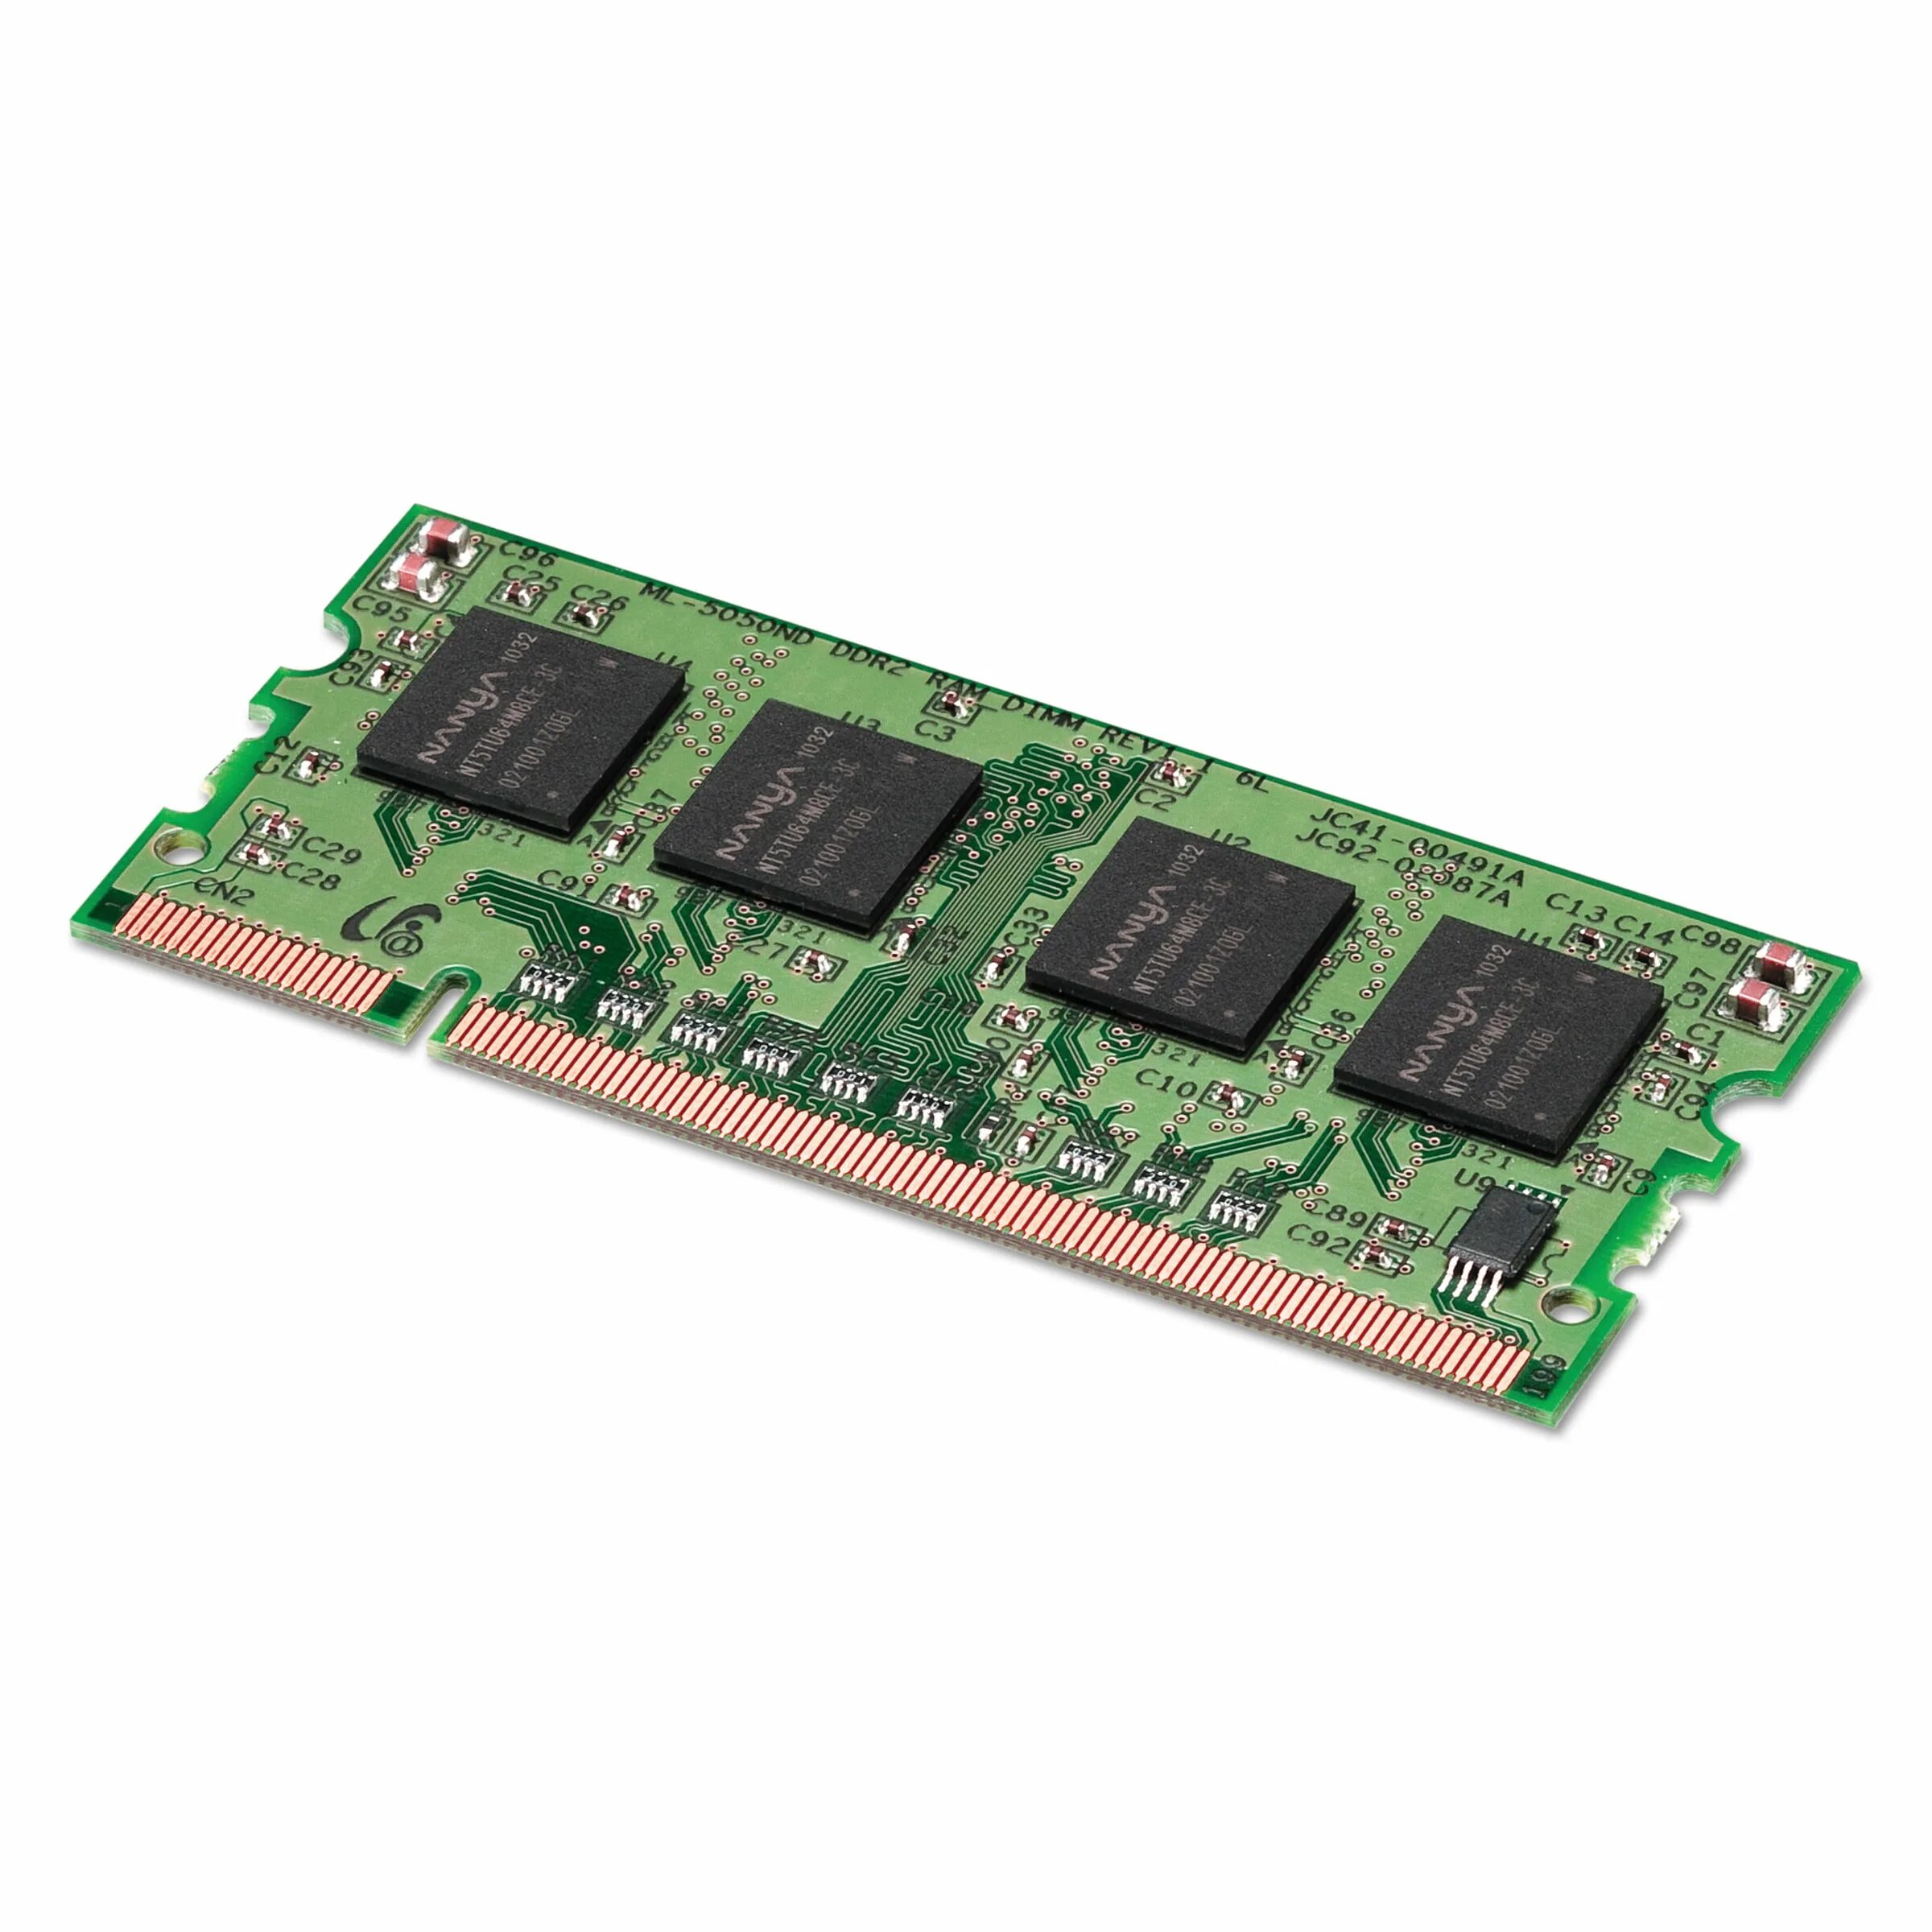 Модуль оперативной памяти для ноутбука. Память Samsung 11mj8. Ddr2 SDRAM. Dram m12l64322a-. Память ГБ.